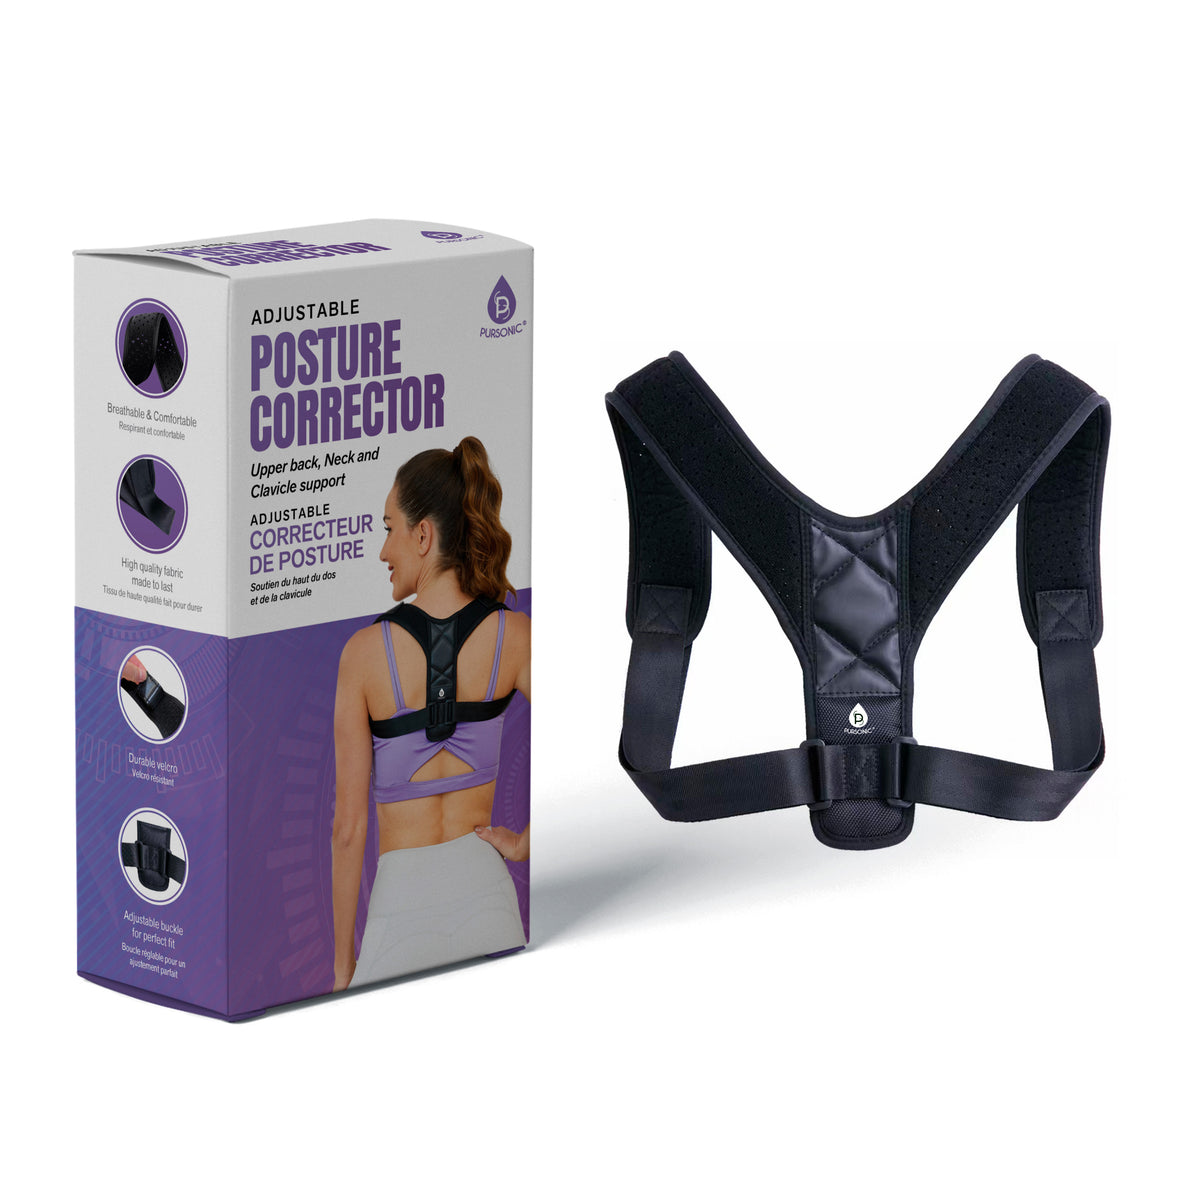 Adjustable Posture Corrector Upper Back, Neck and Clavicle Support